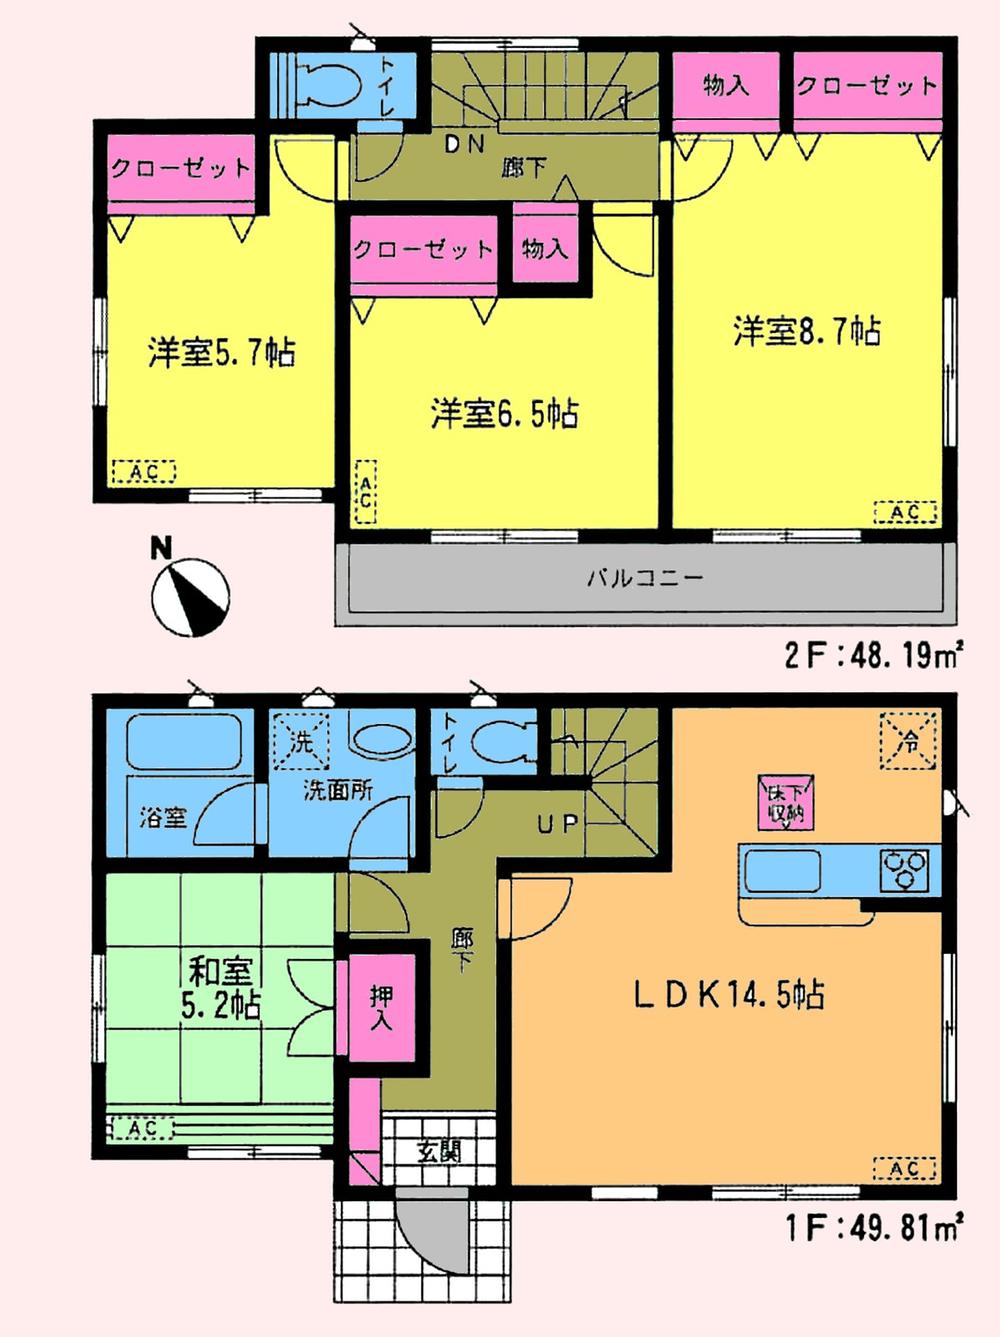 Floor plan. (1 Building), Price 19,800,000 yen, 4LDK, Land area 139.18 sq m , Building area 98 sq m